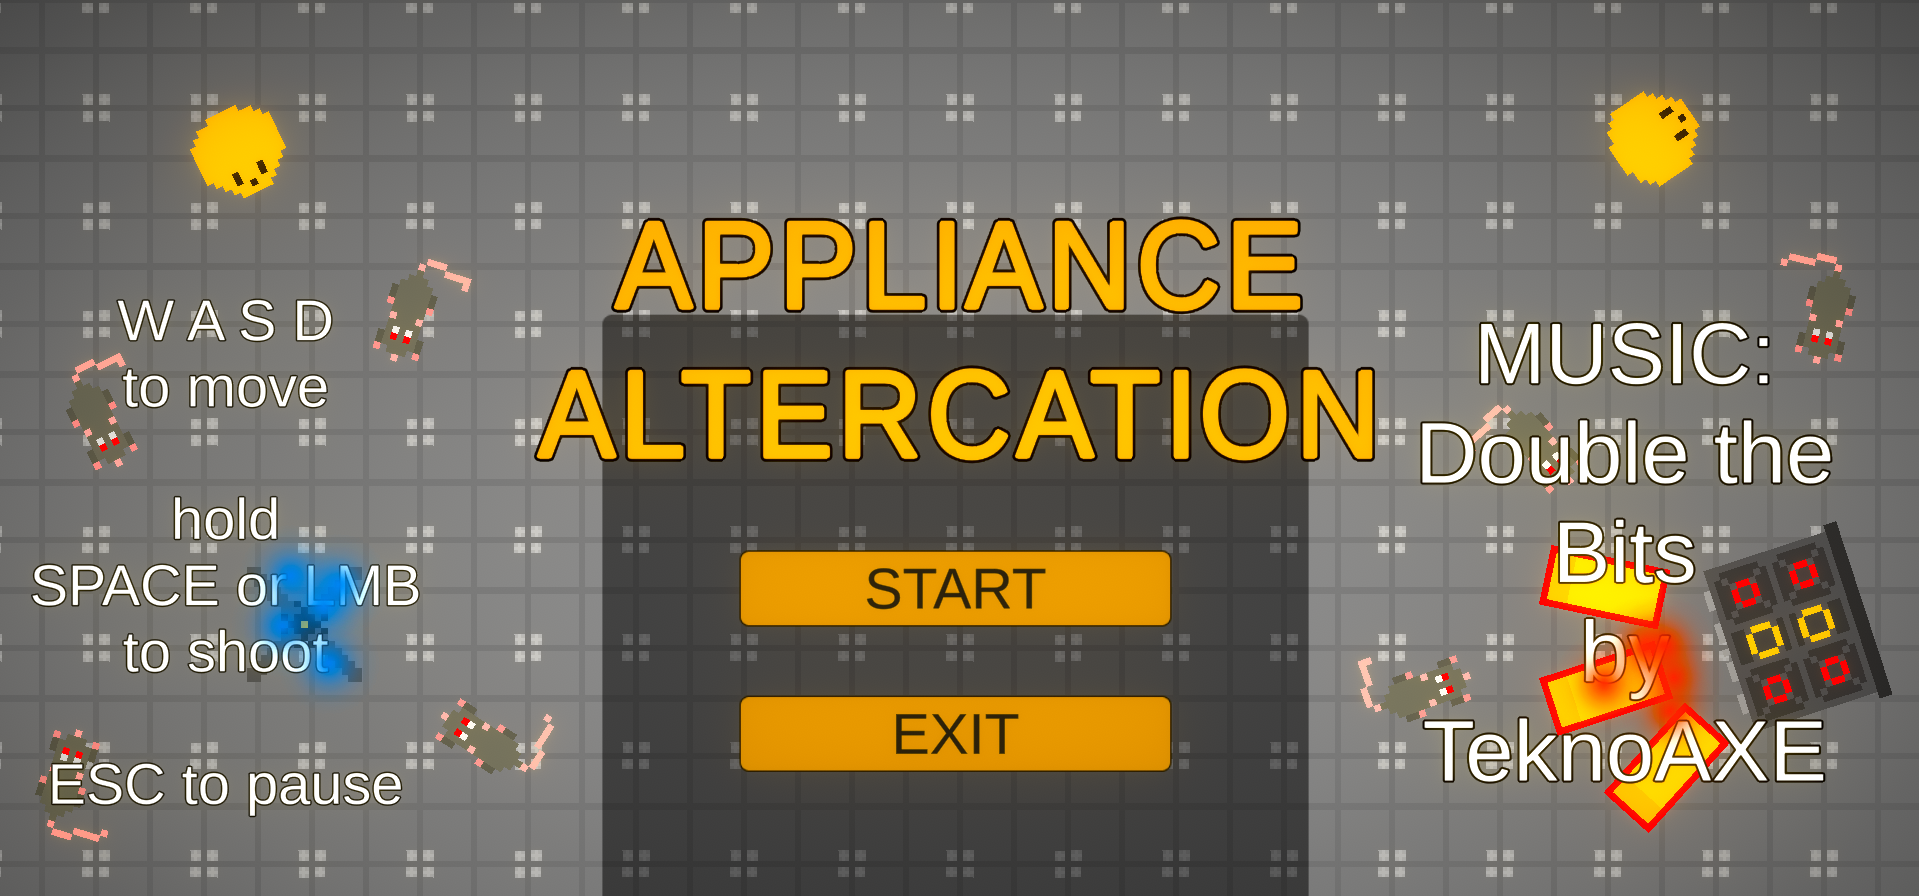 Appliance Altercation